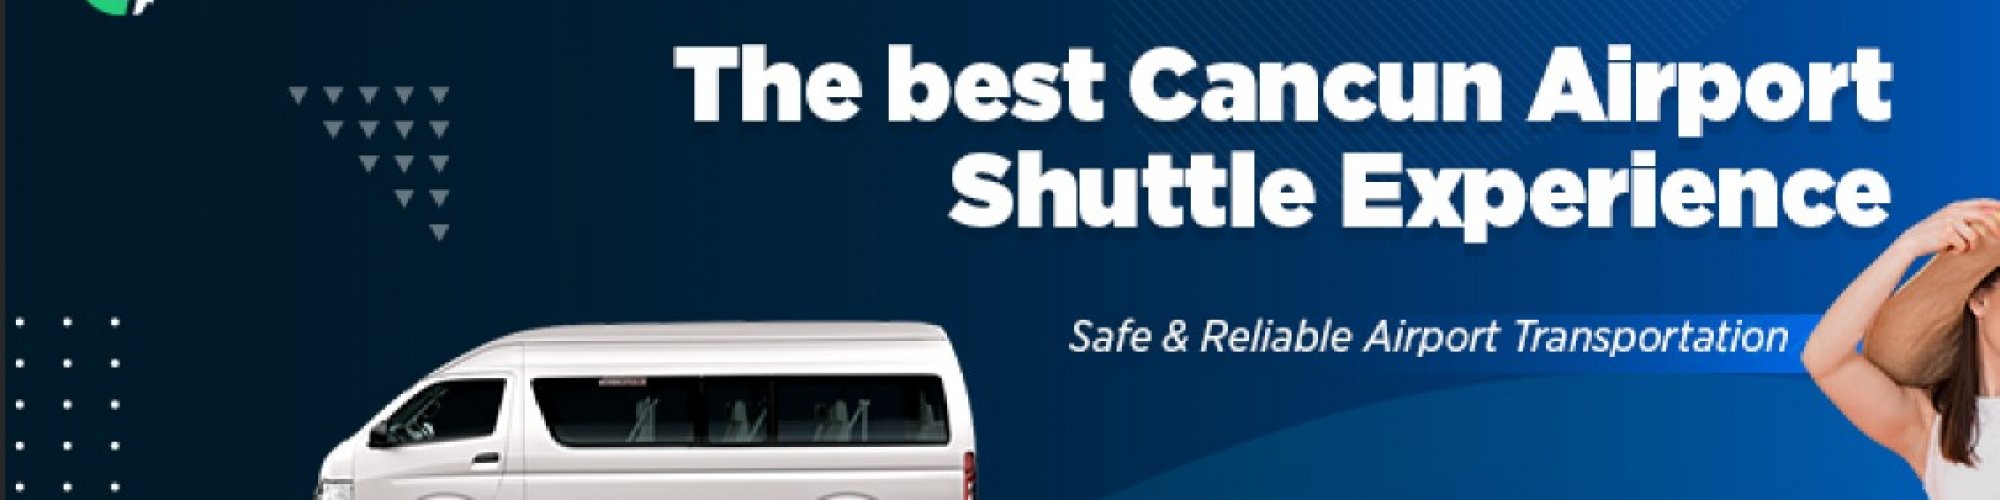 Cancun Airport Shuttle Transportation